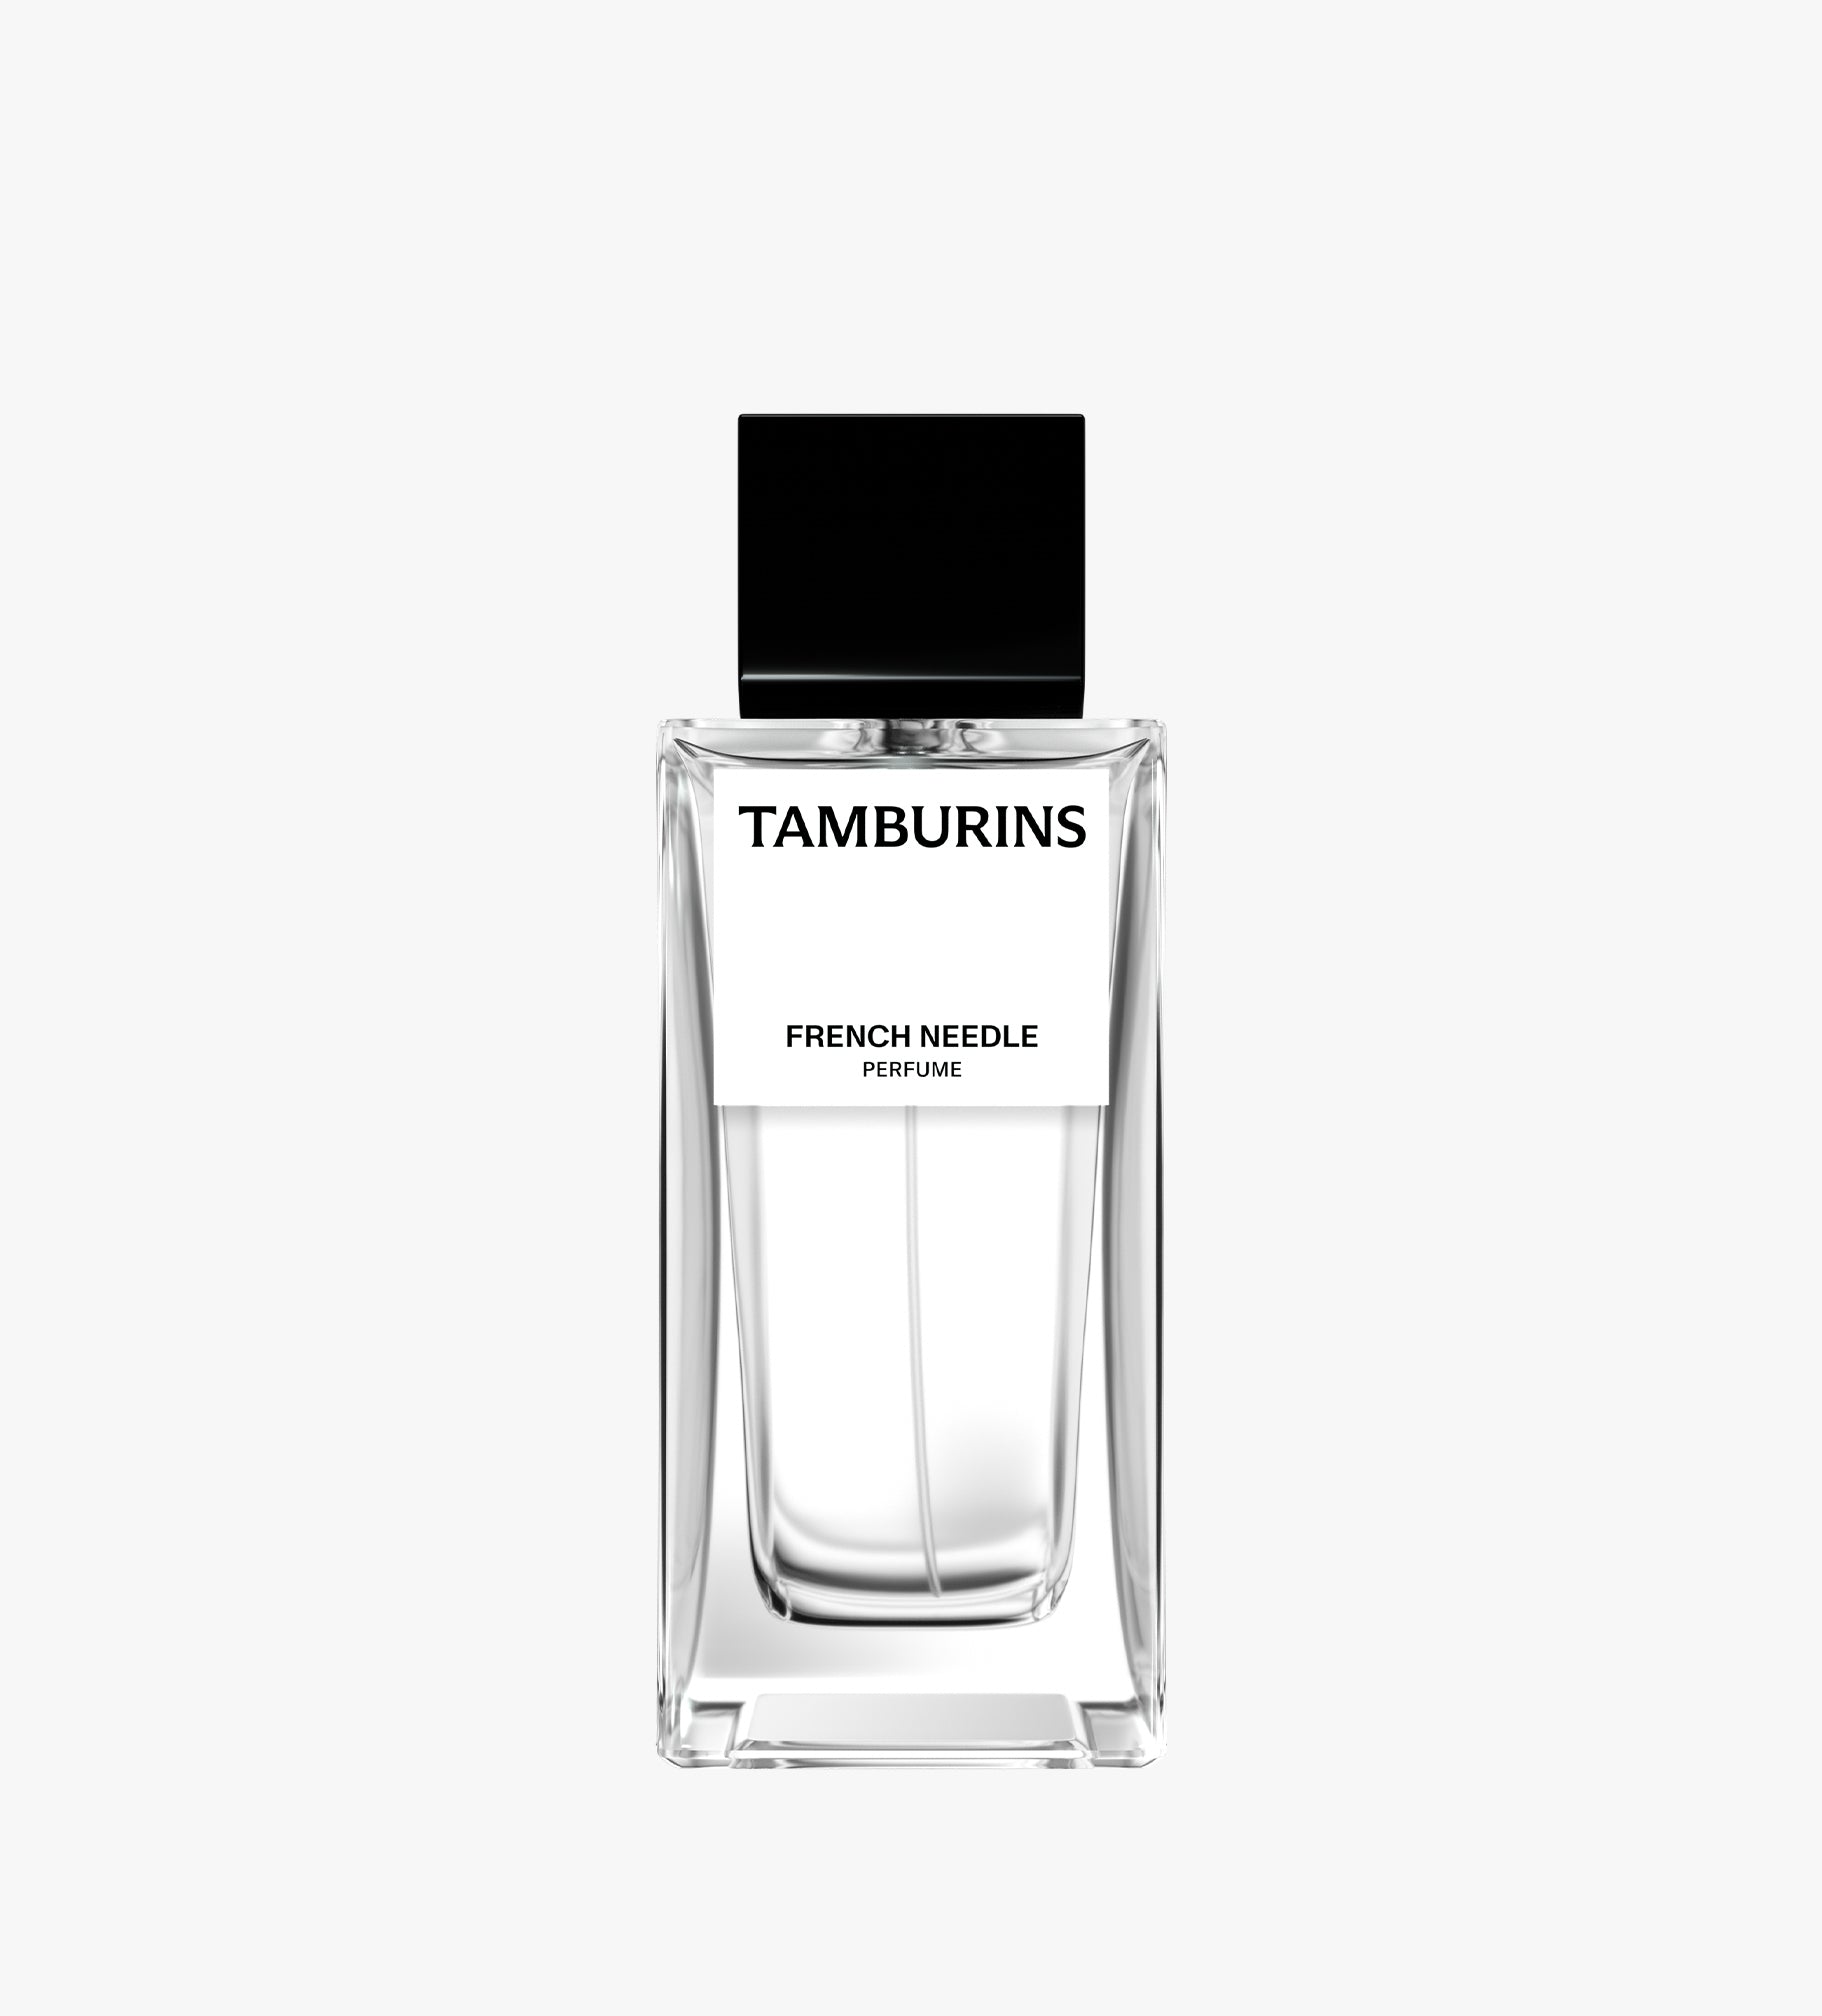 Tamburins Perfume - French Needle